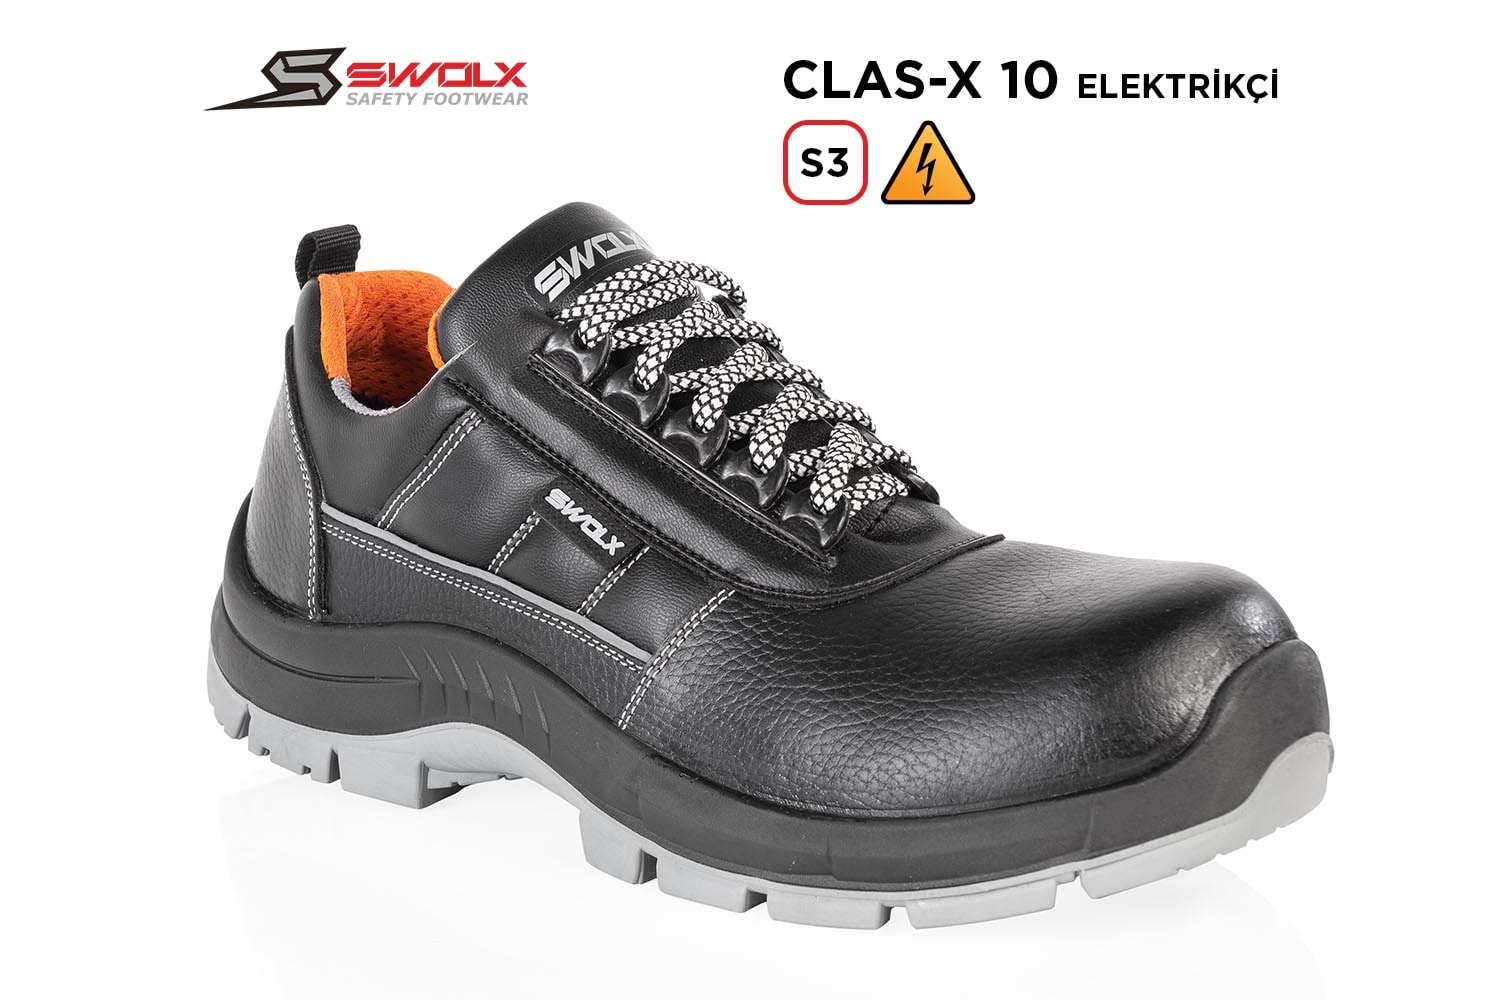 Swolx İş Ayakkabısı - Clas-X 10 S3 Elektrikçi - 43